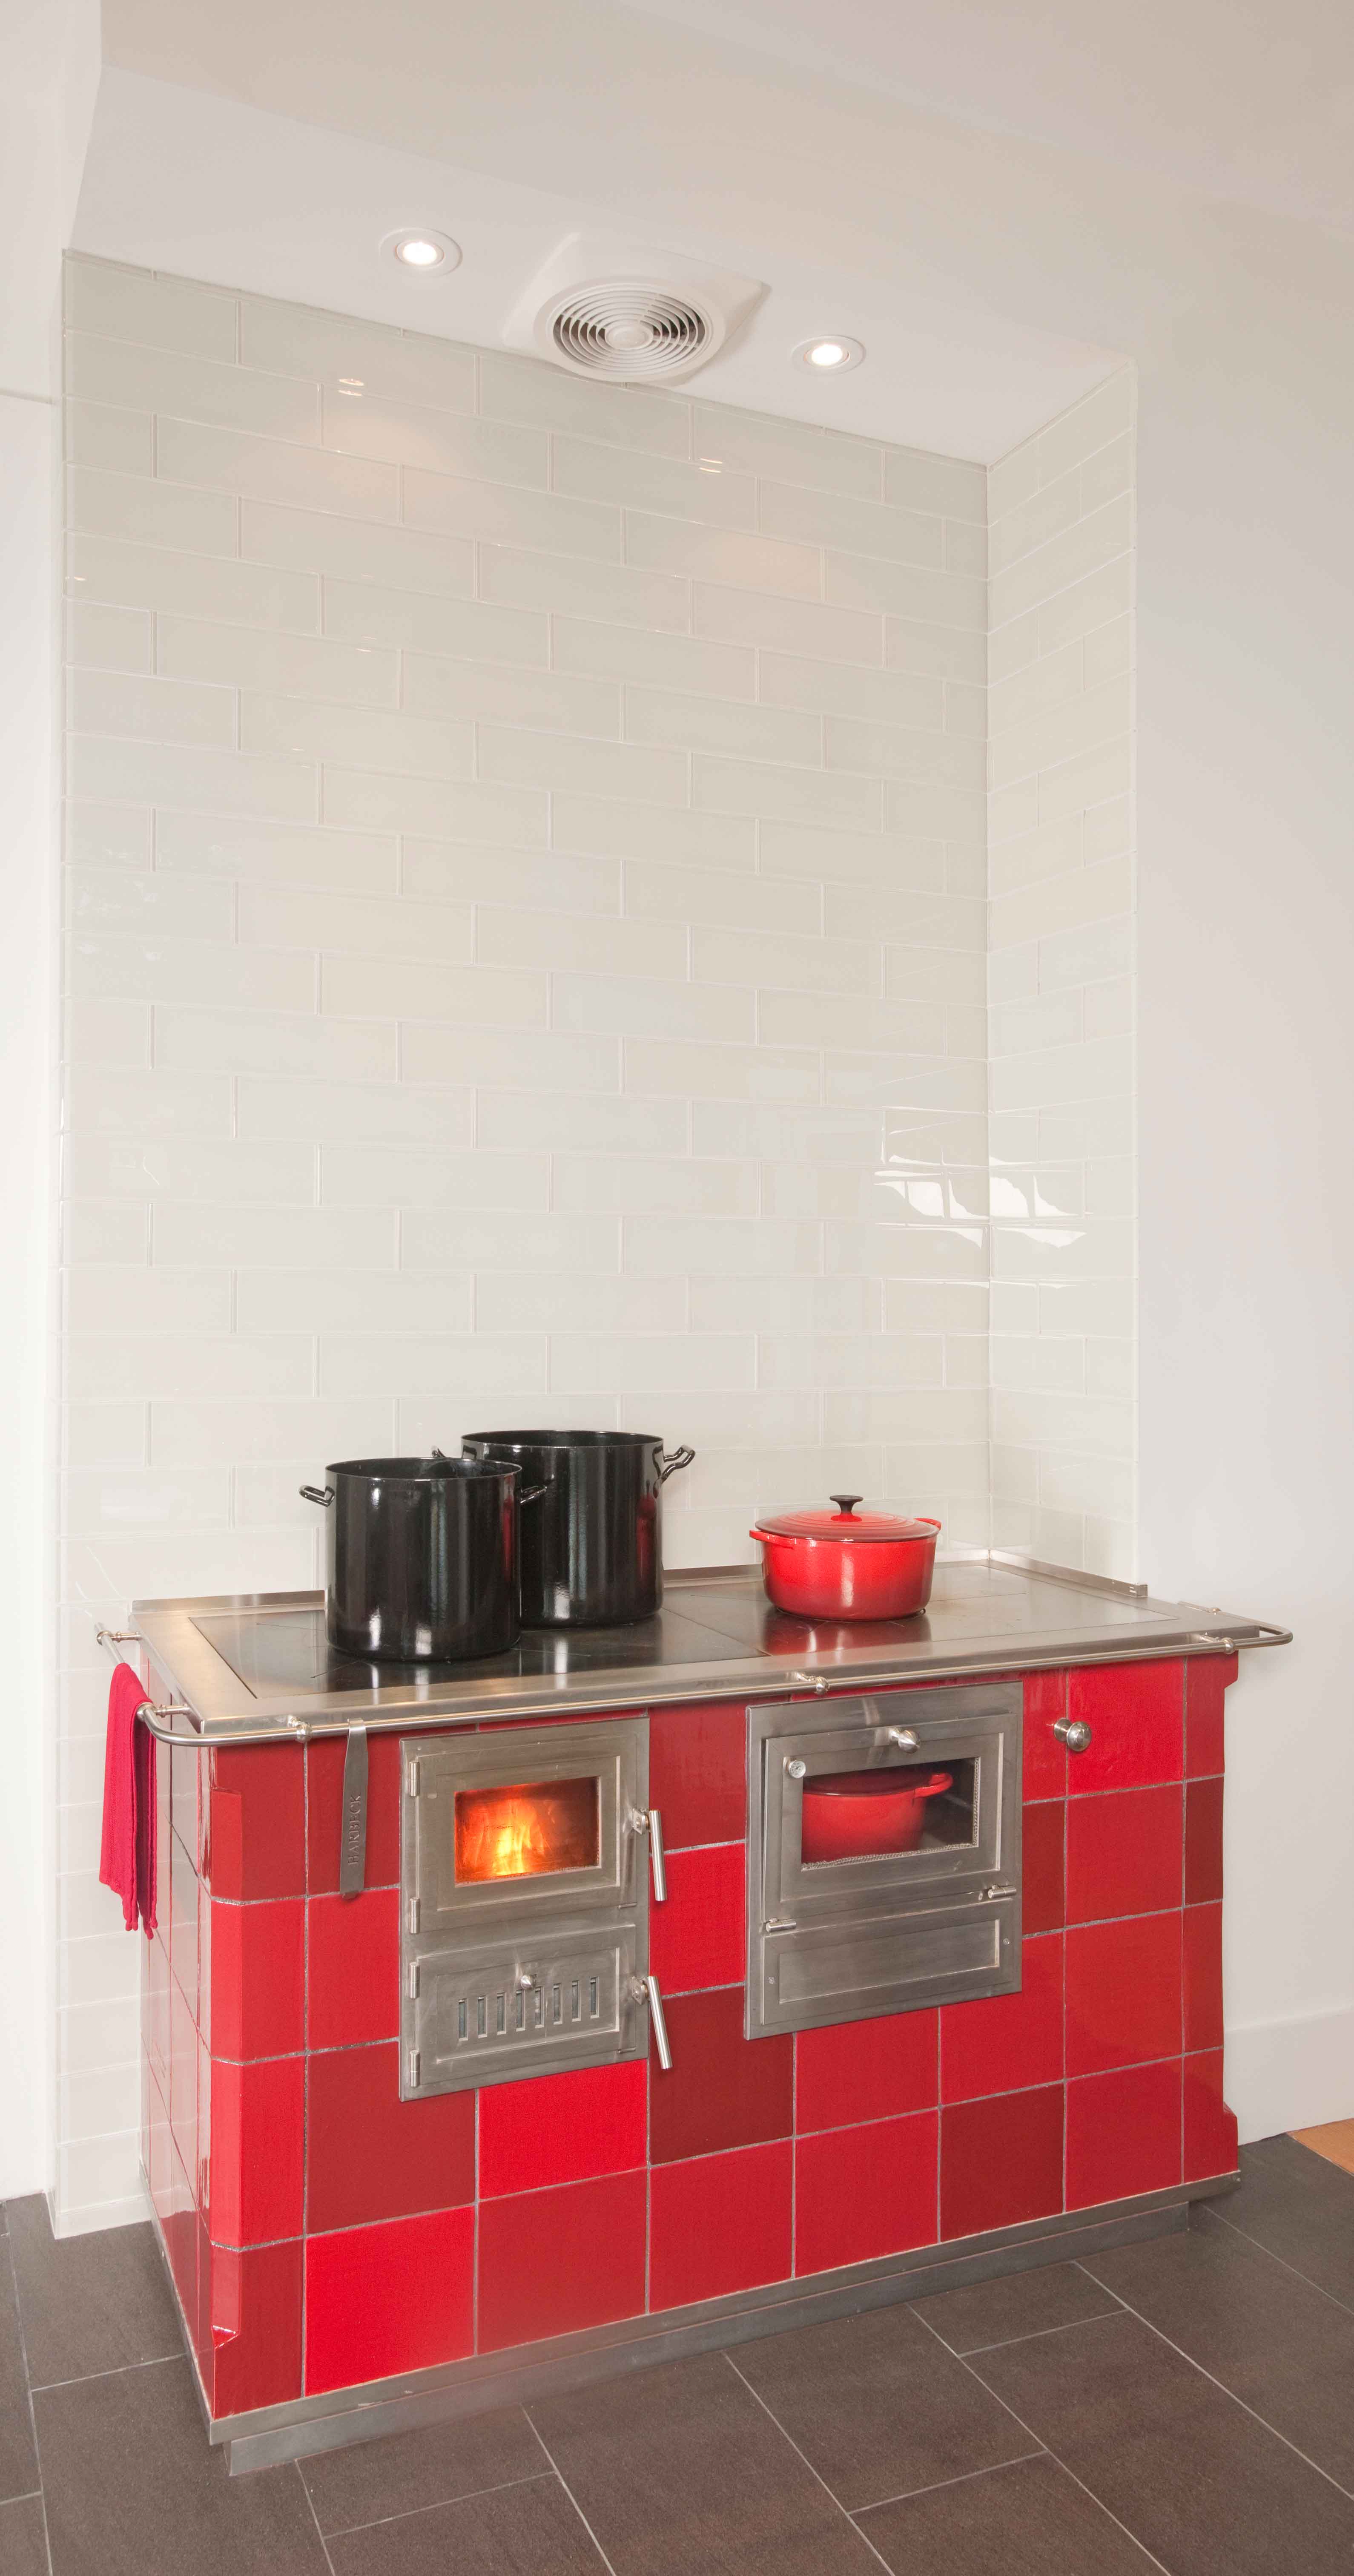 Jessica Steinhäuser. Red-glazed kachelöfen with cookstove and baking oven. 